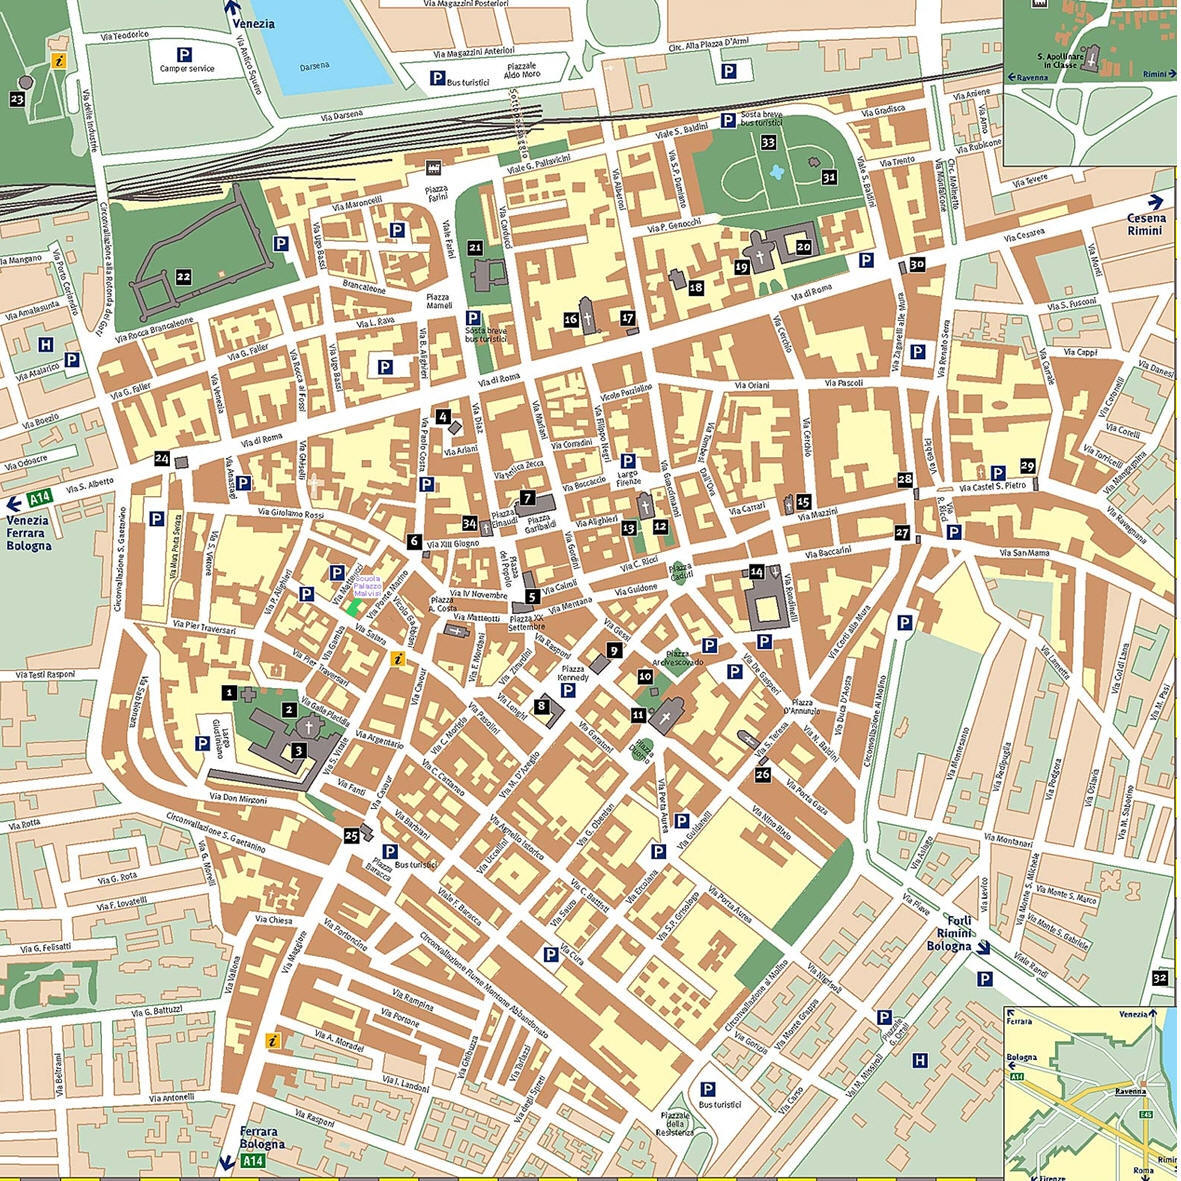 Ravenna centre plan